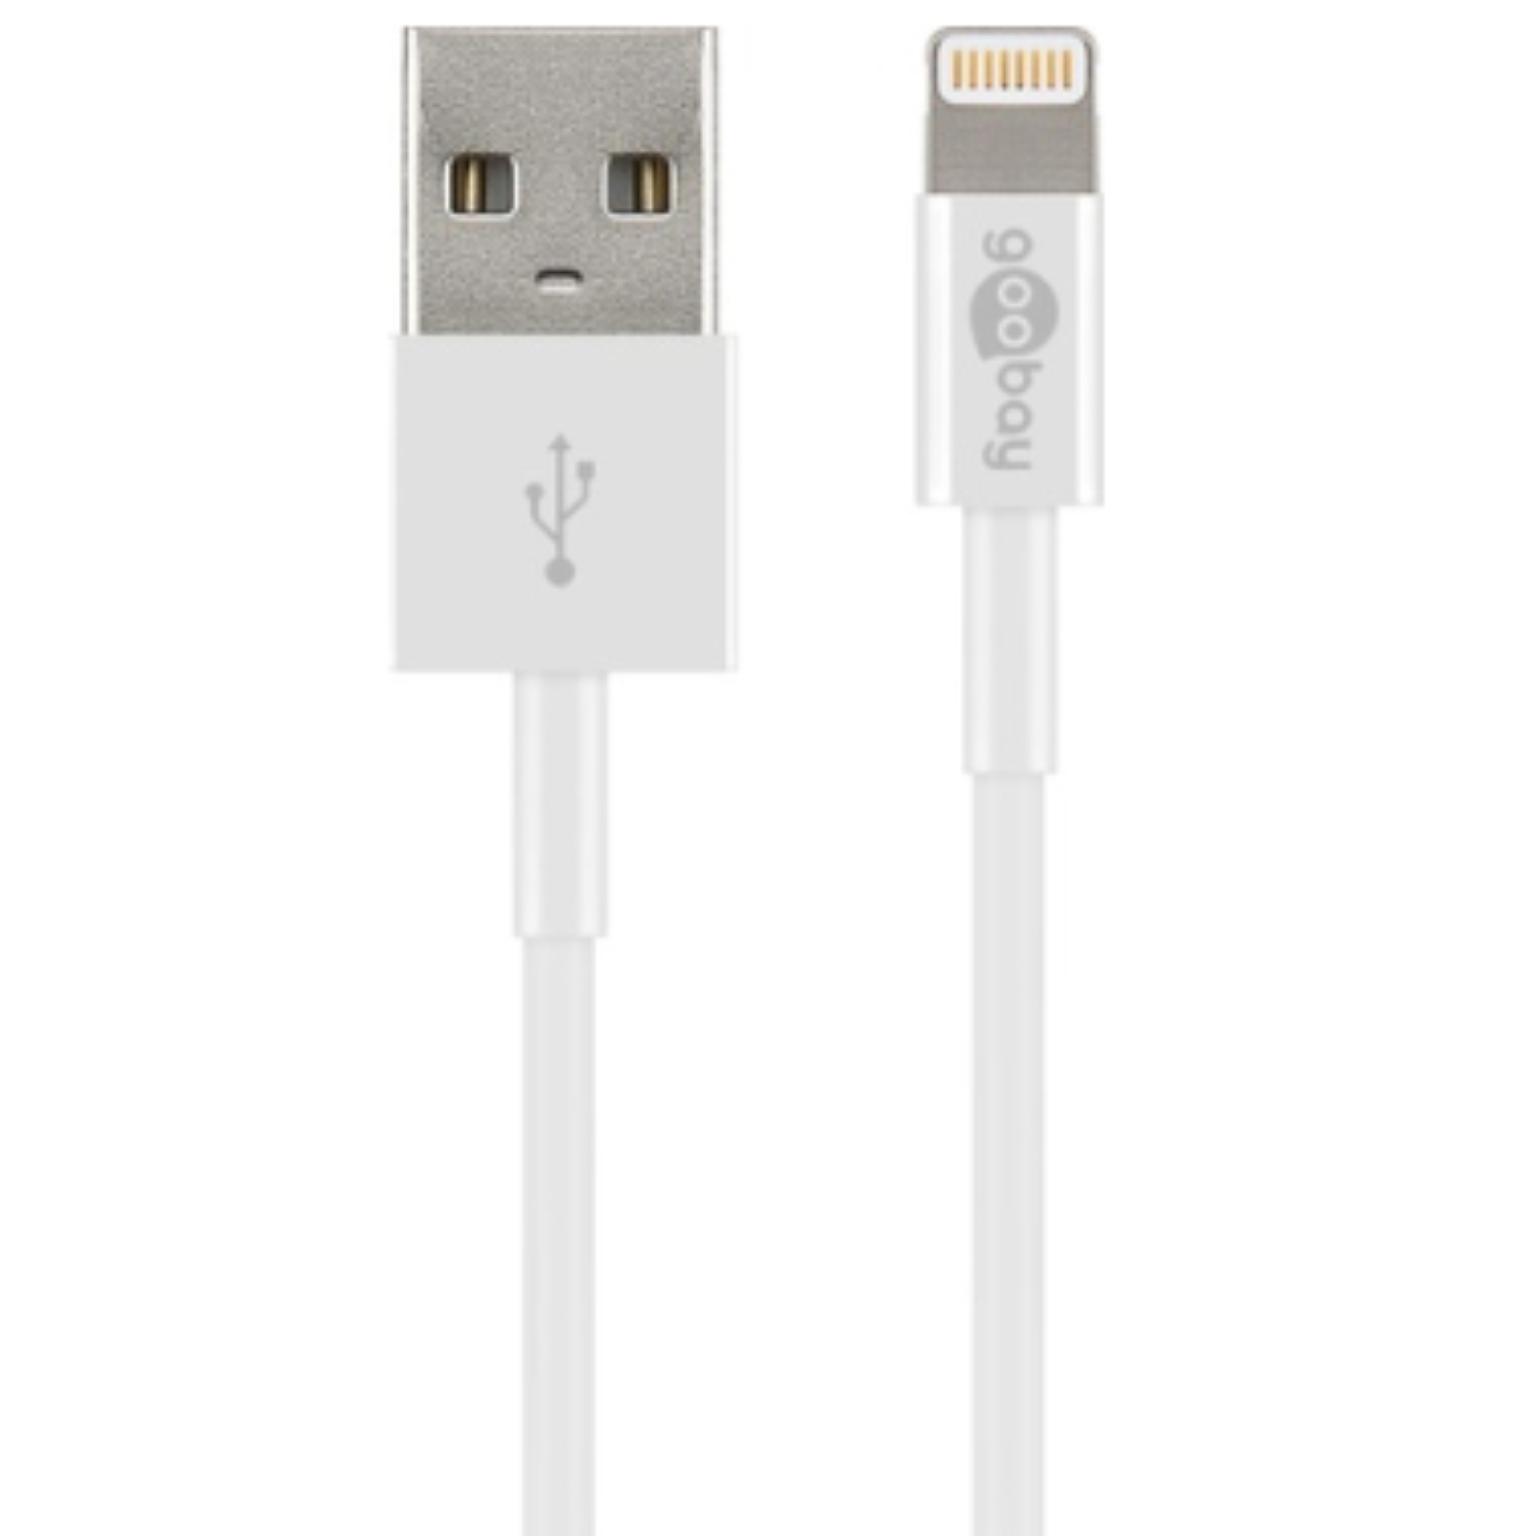 Spin Sympton Moderniseren Lightning Kabel - USB - Versie: 2.0 - HighSpeed, Aansluiting 1: Lightning  male, Aansluiting 2: USB A 2.0 male. Lengte: 0.5 meter.